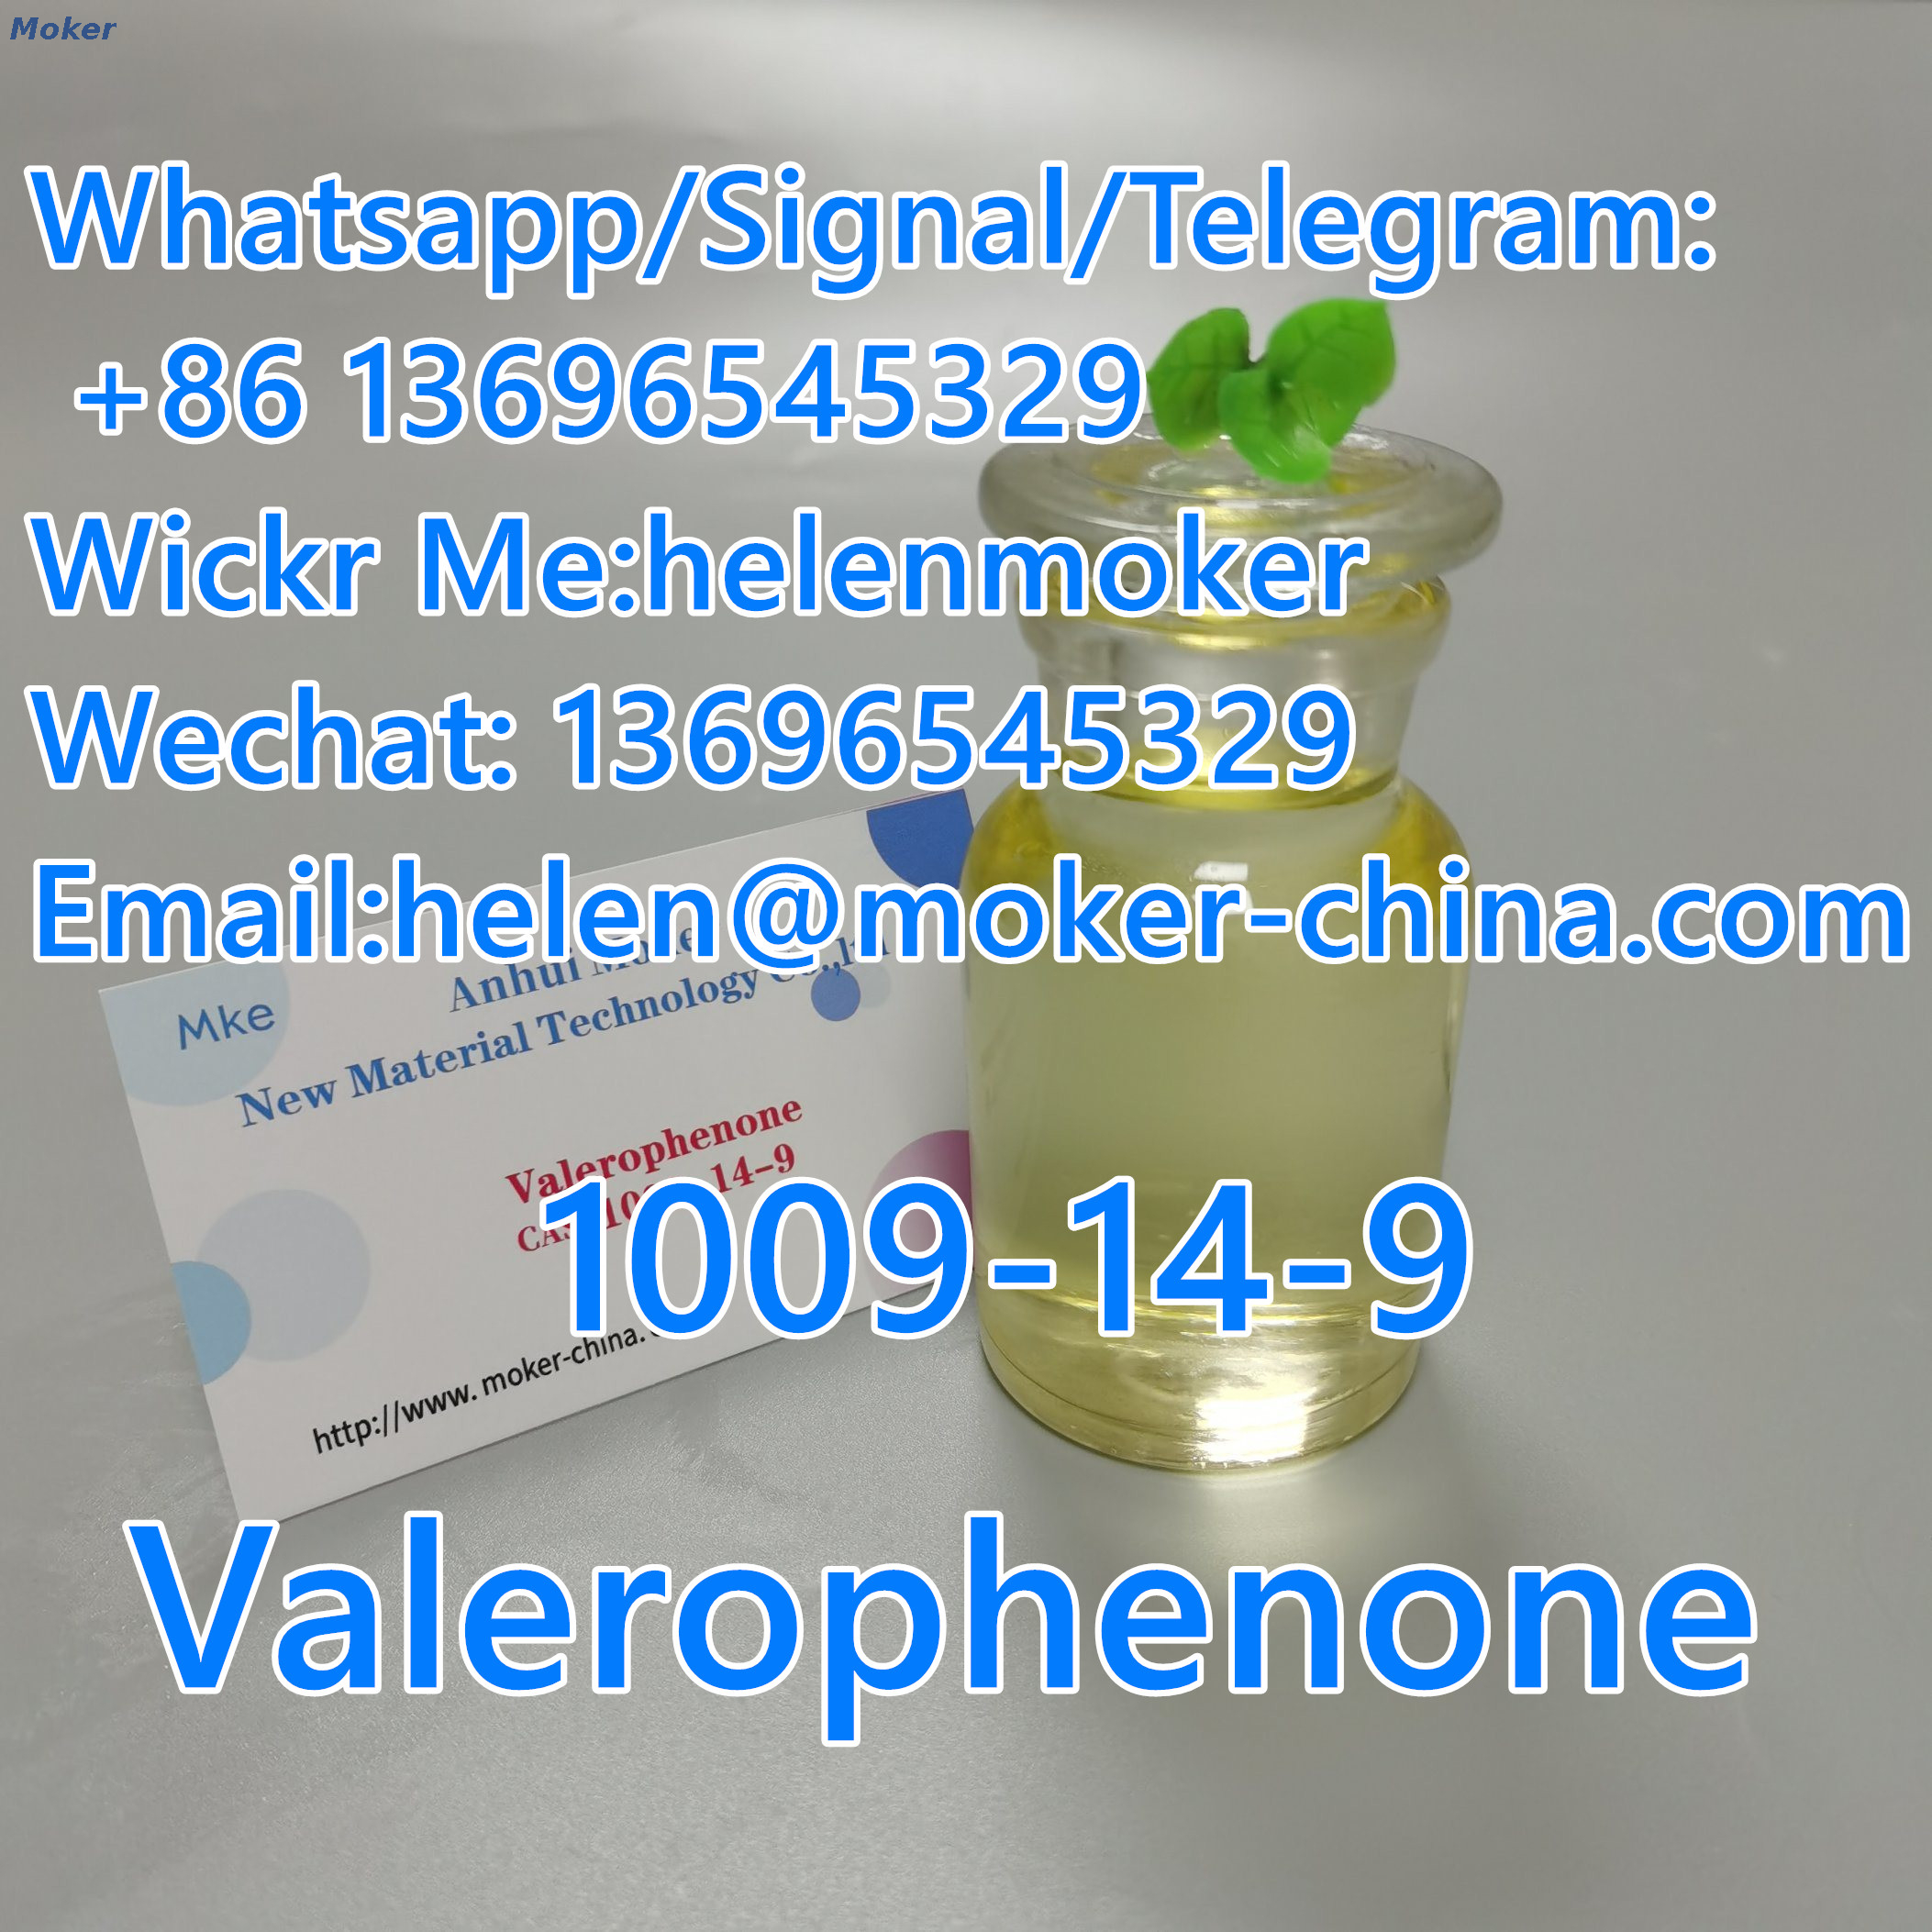 TOP Qulity CAS 1009-14-9 Valerophenone with Low Price